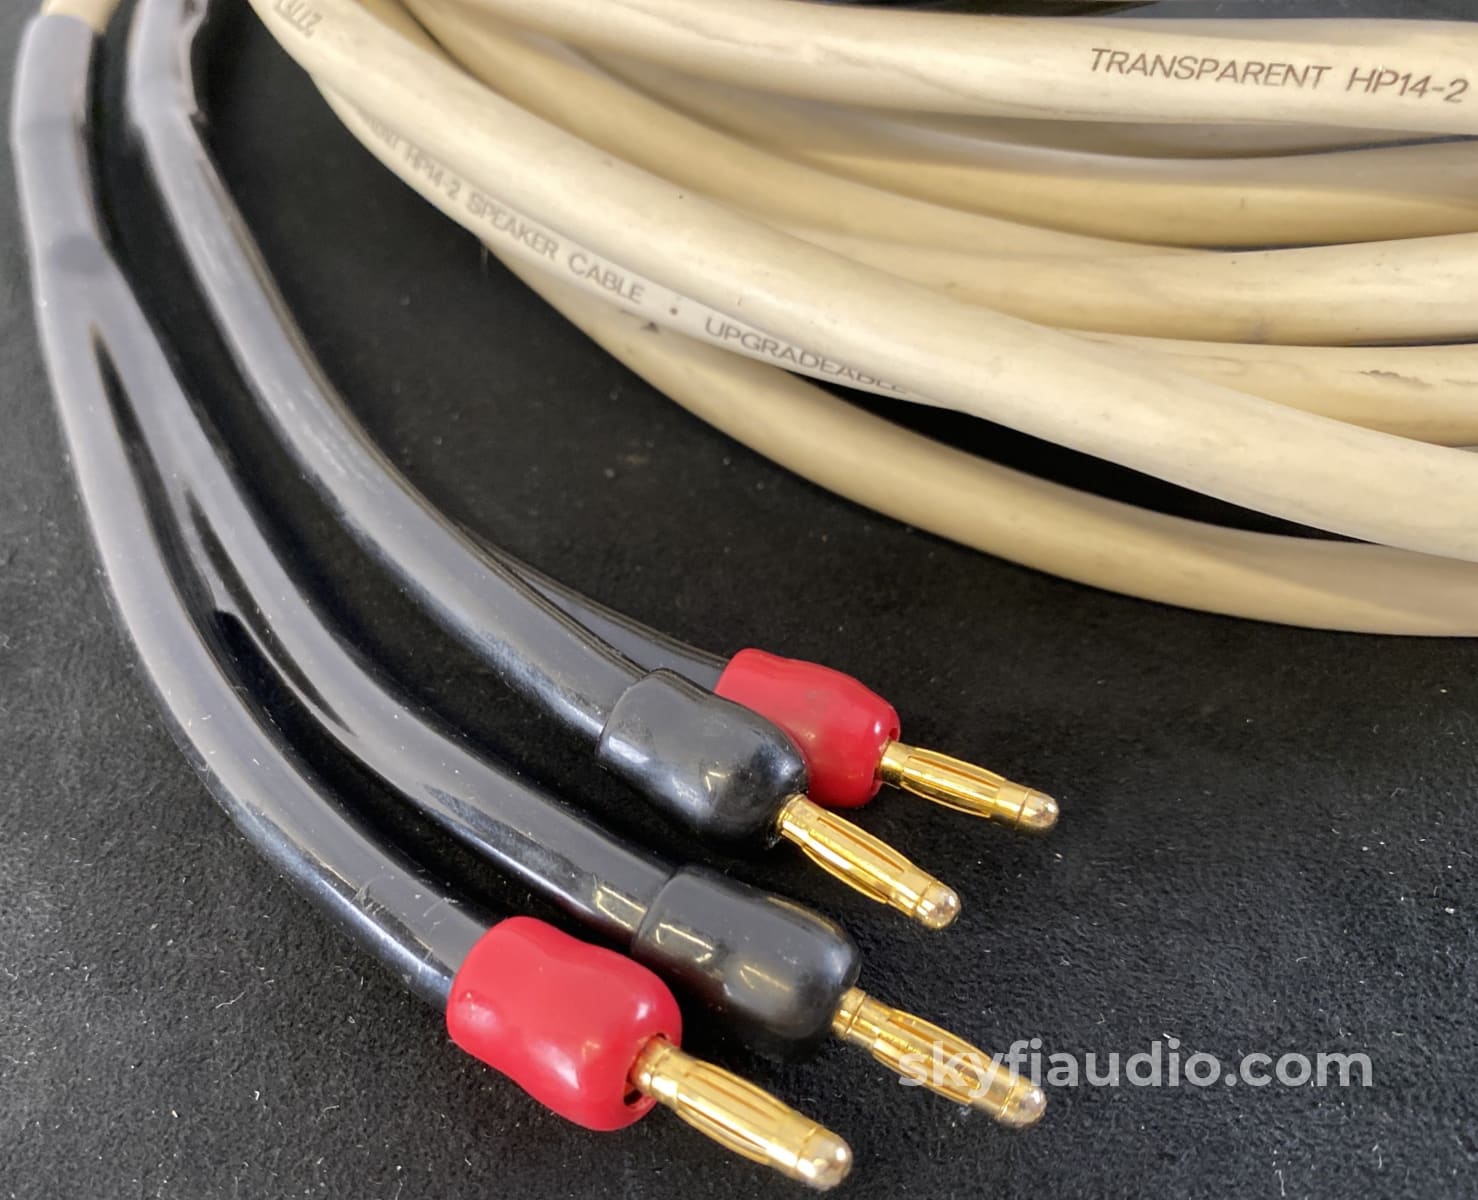 Transparent High Performance Hp14-2 Speaker Cable - Original Box 15 Cables